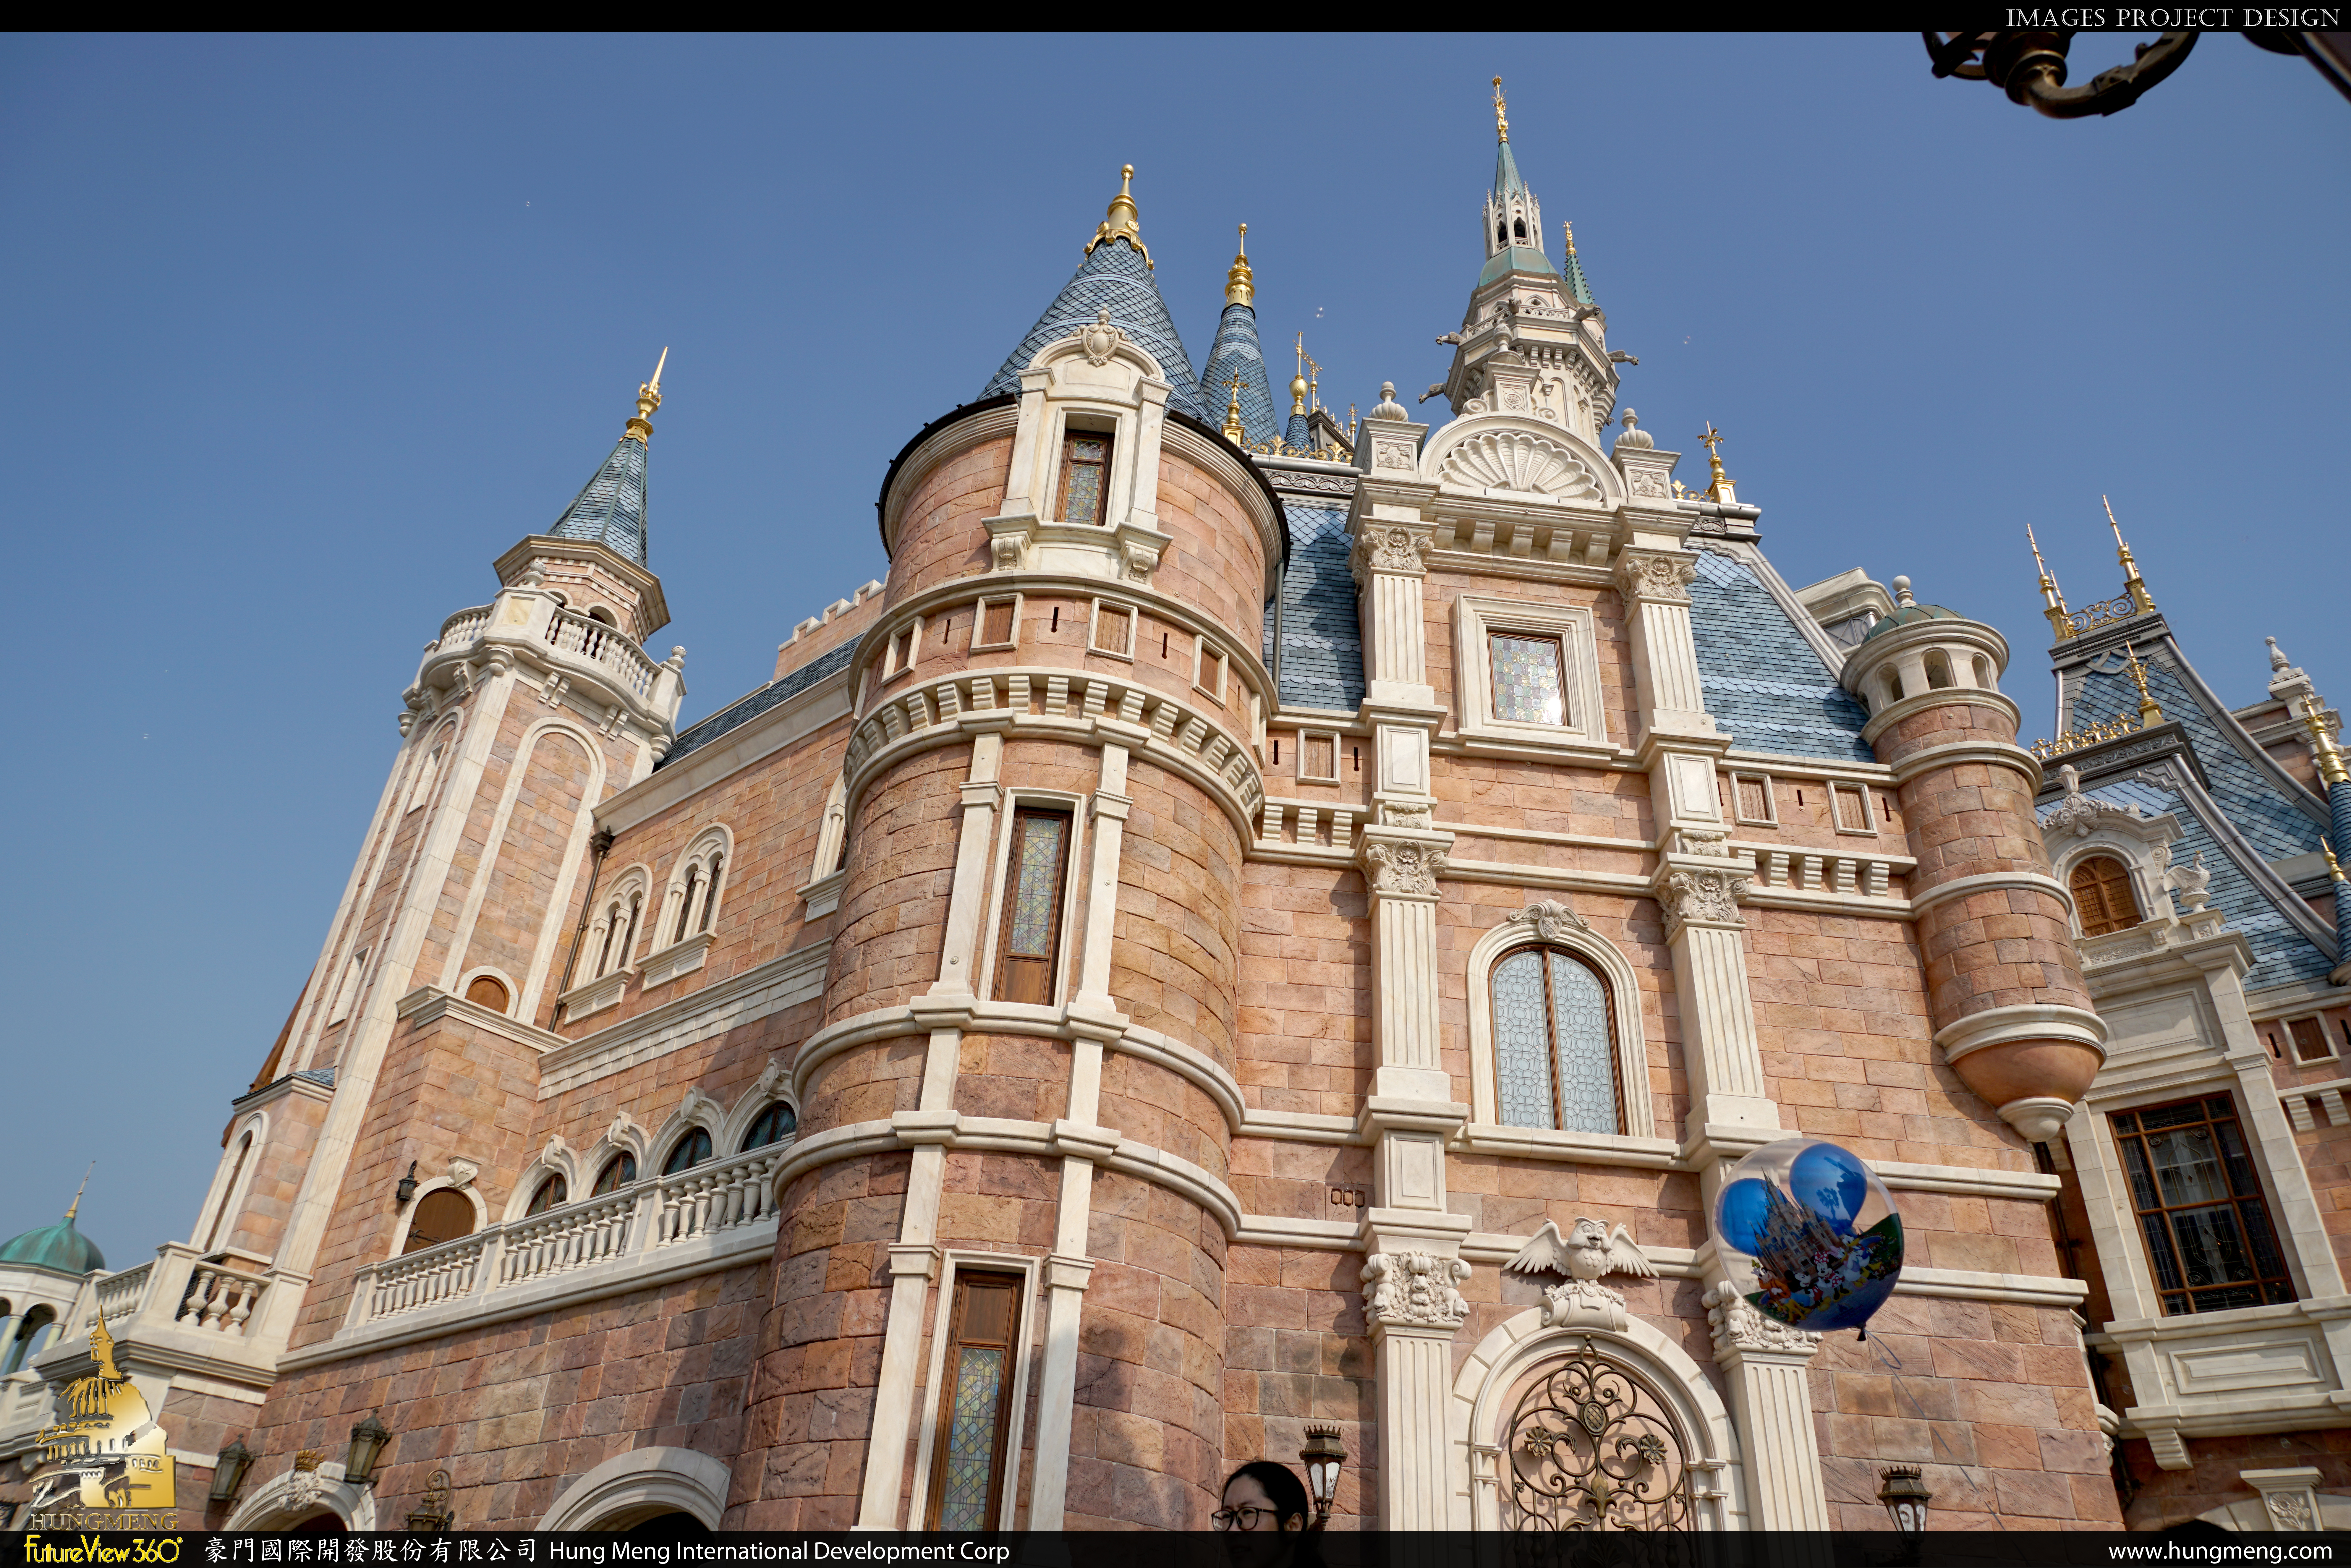 Shanghai Disneyland Castle